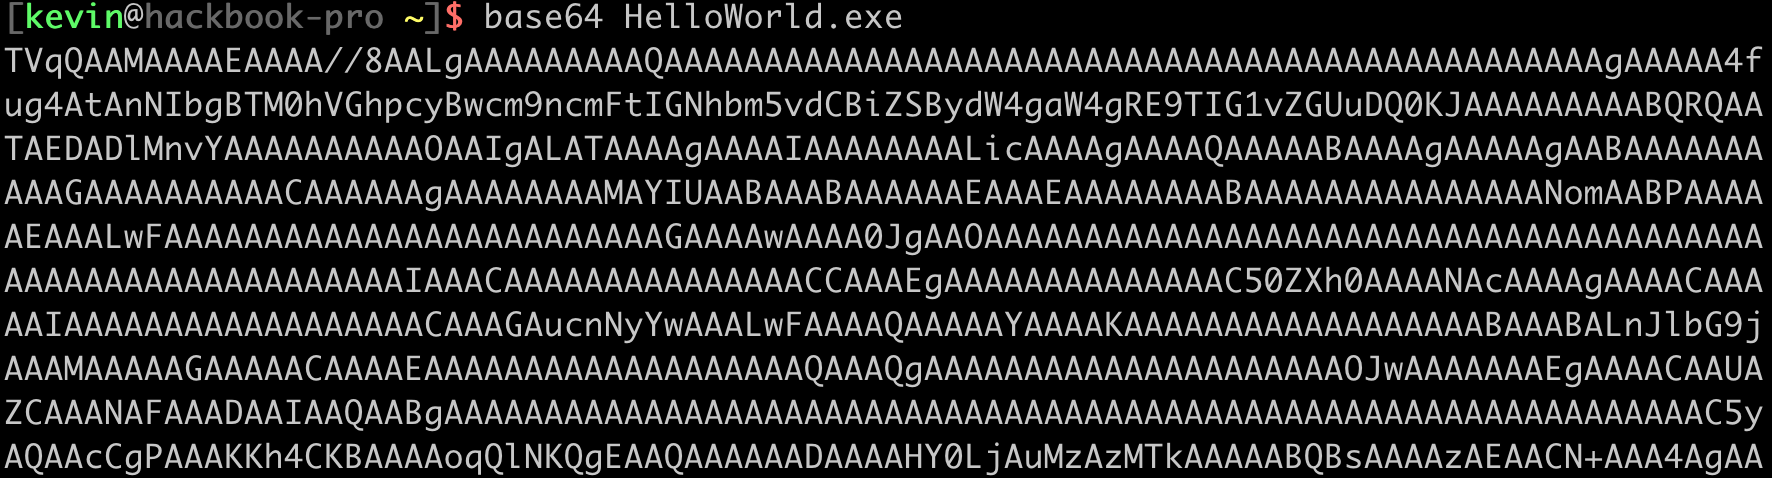 Base64 encoding the Hello World assembly